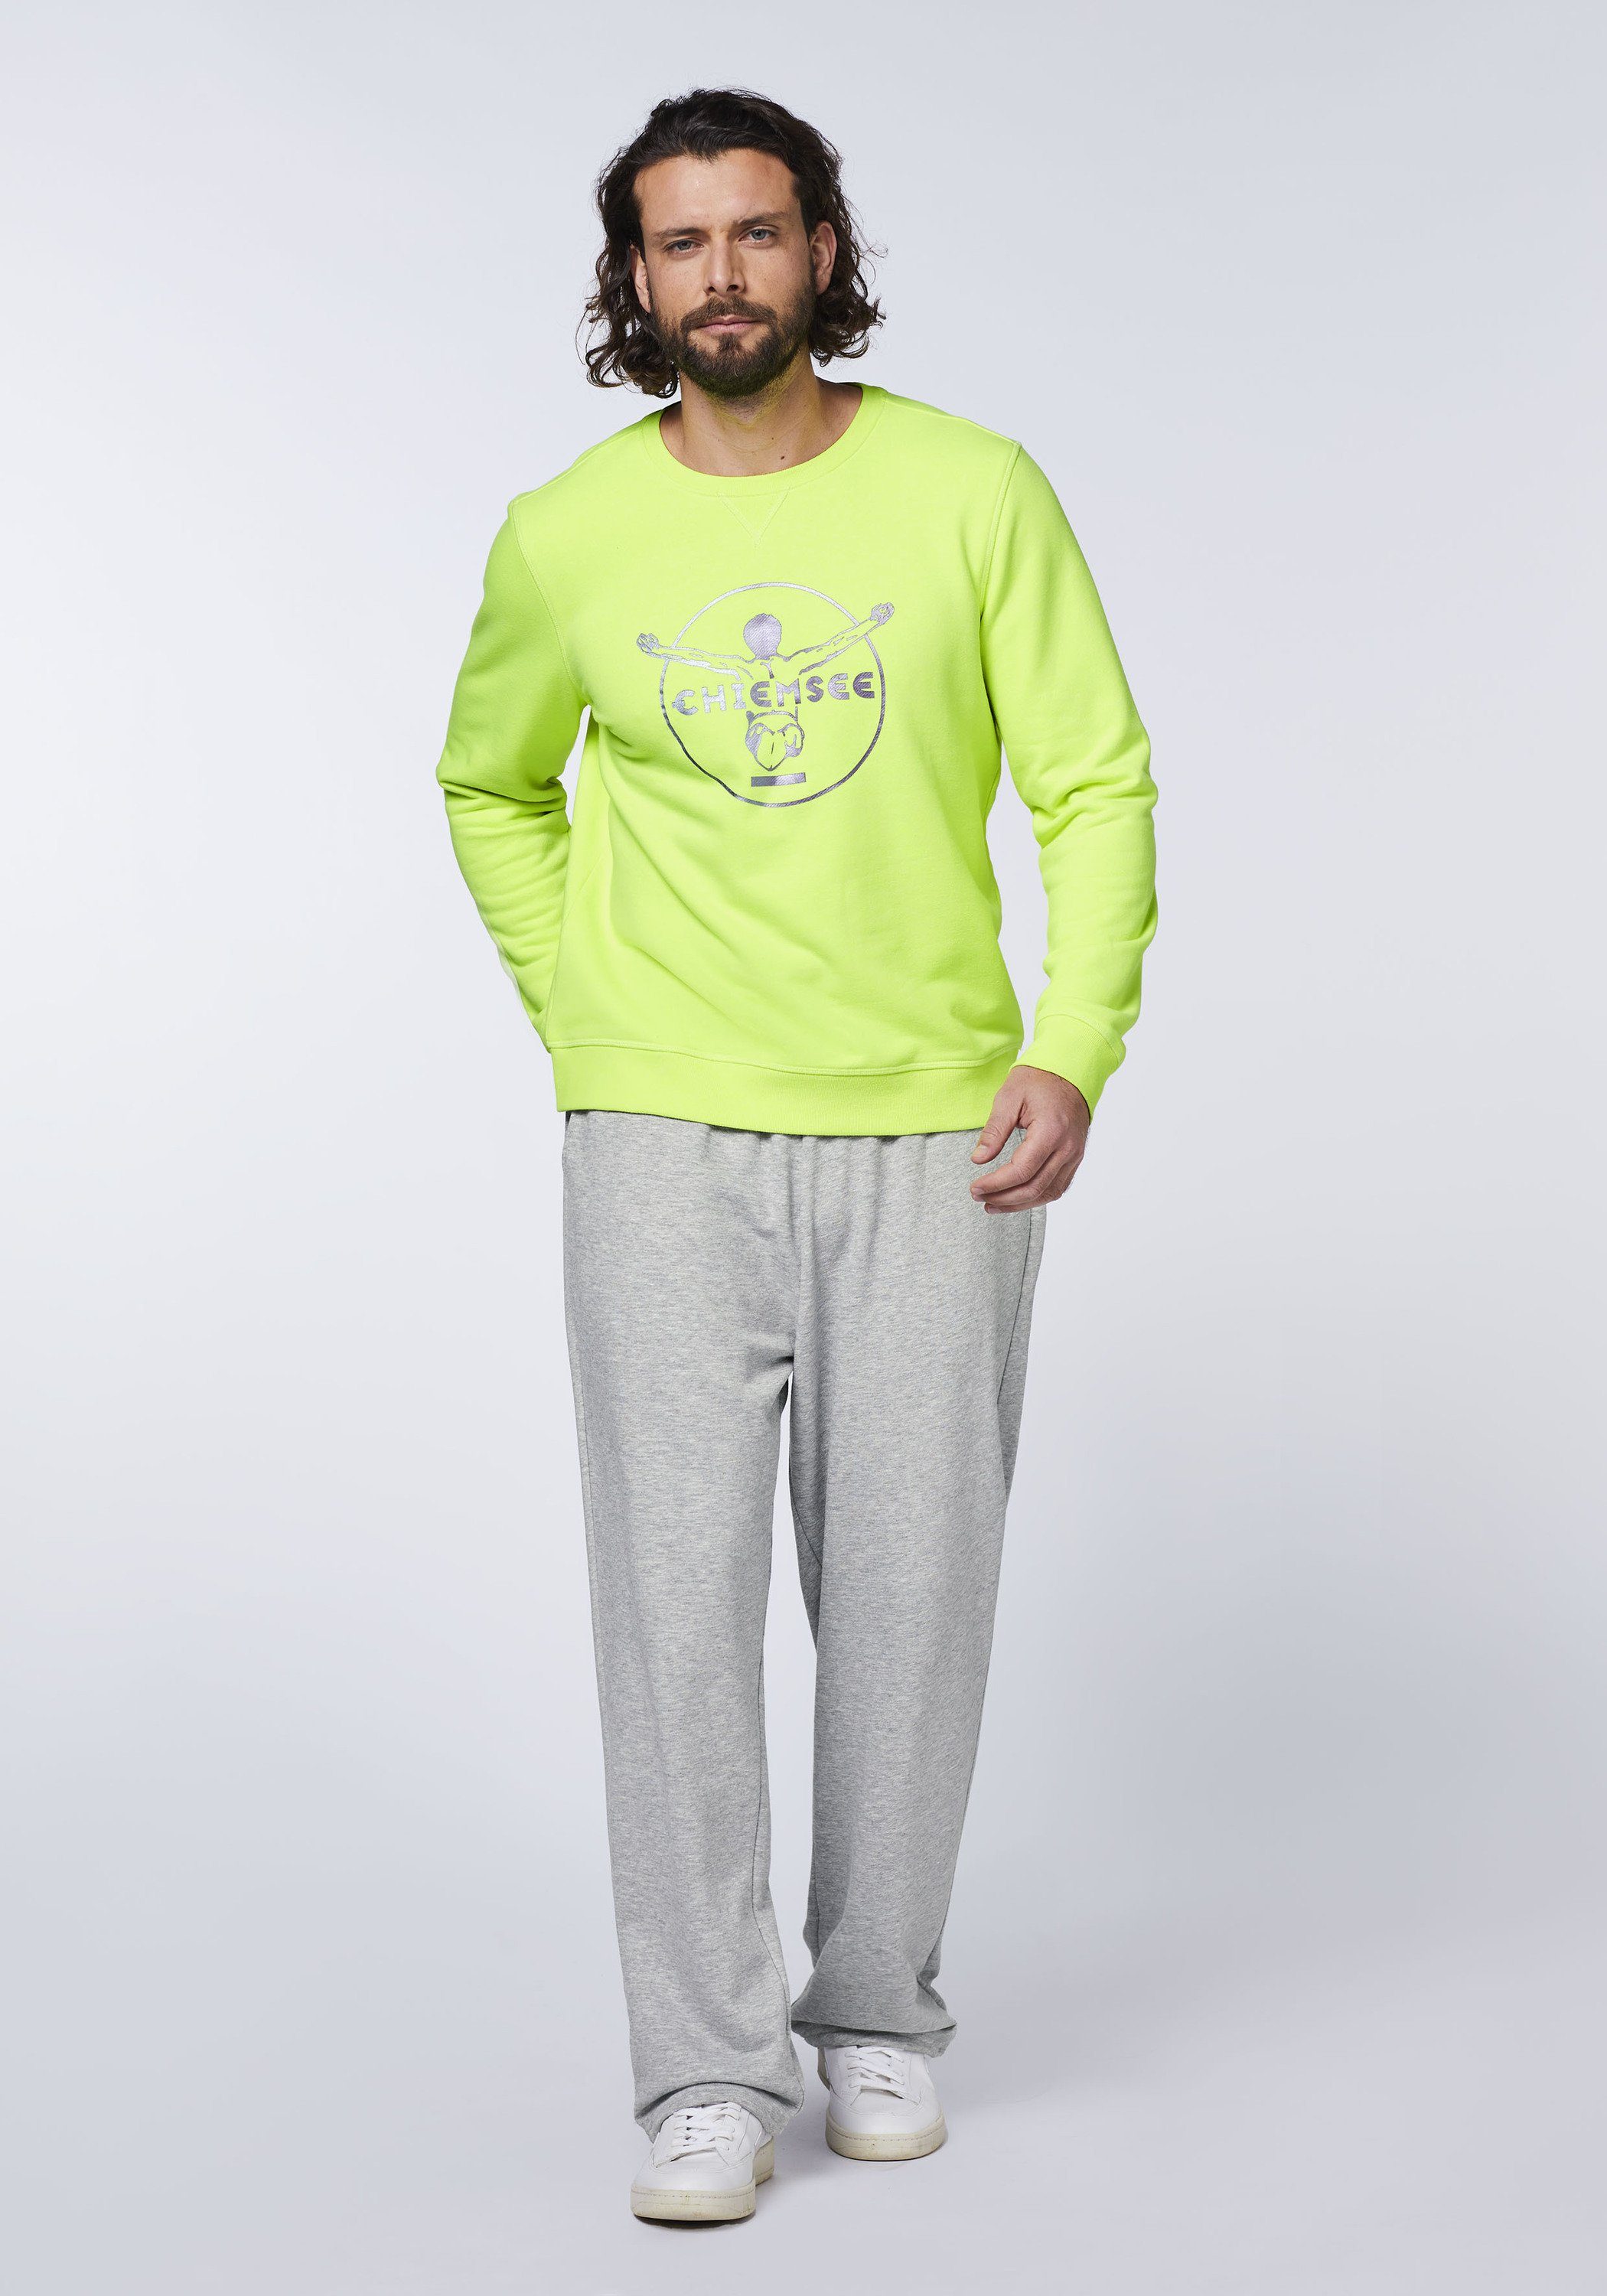 Label-Look Chiemsee im Safety 1 Sweatshirt Sweater Yellow 13-0630